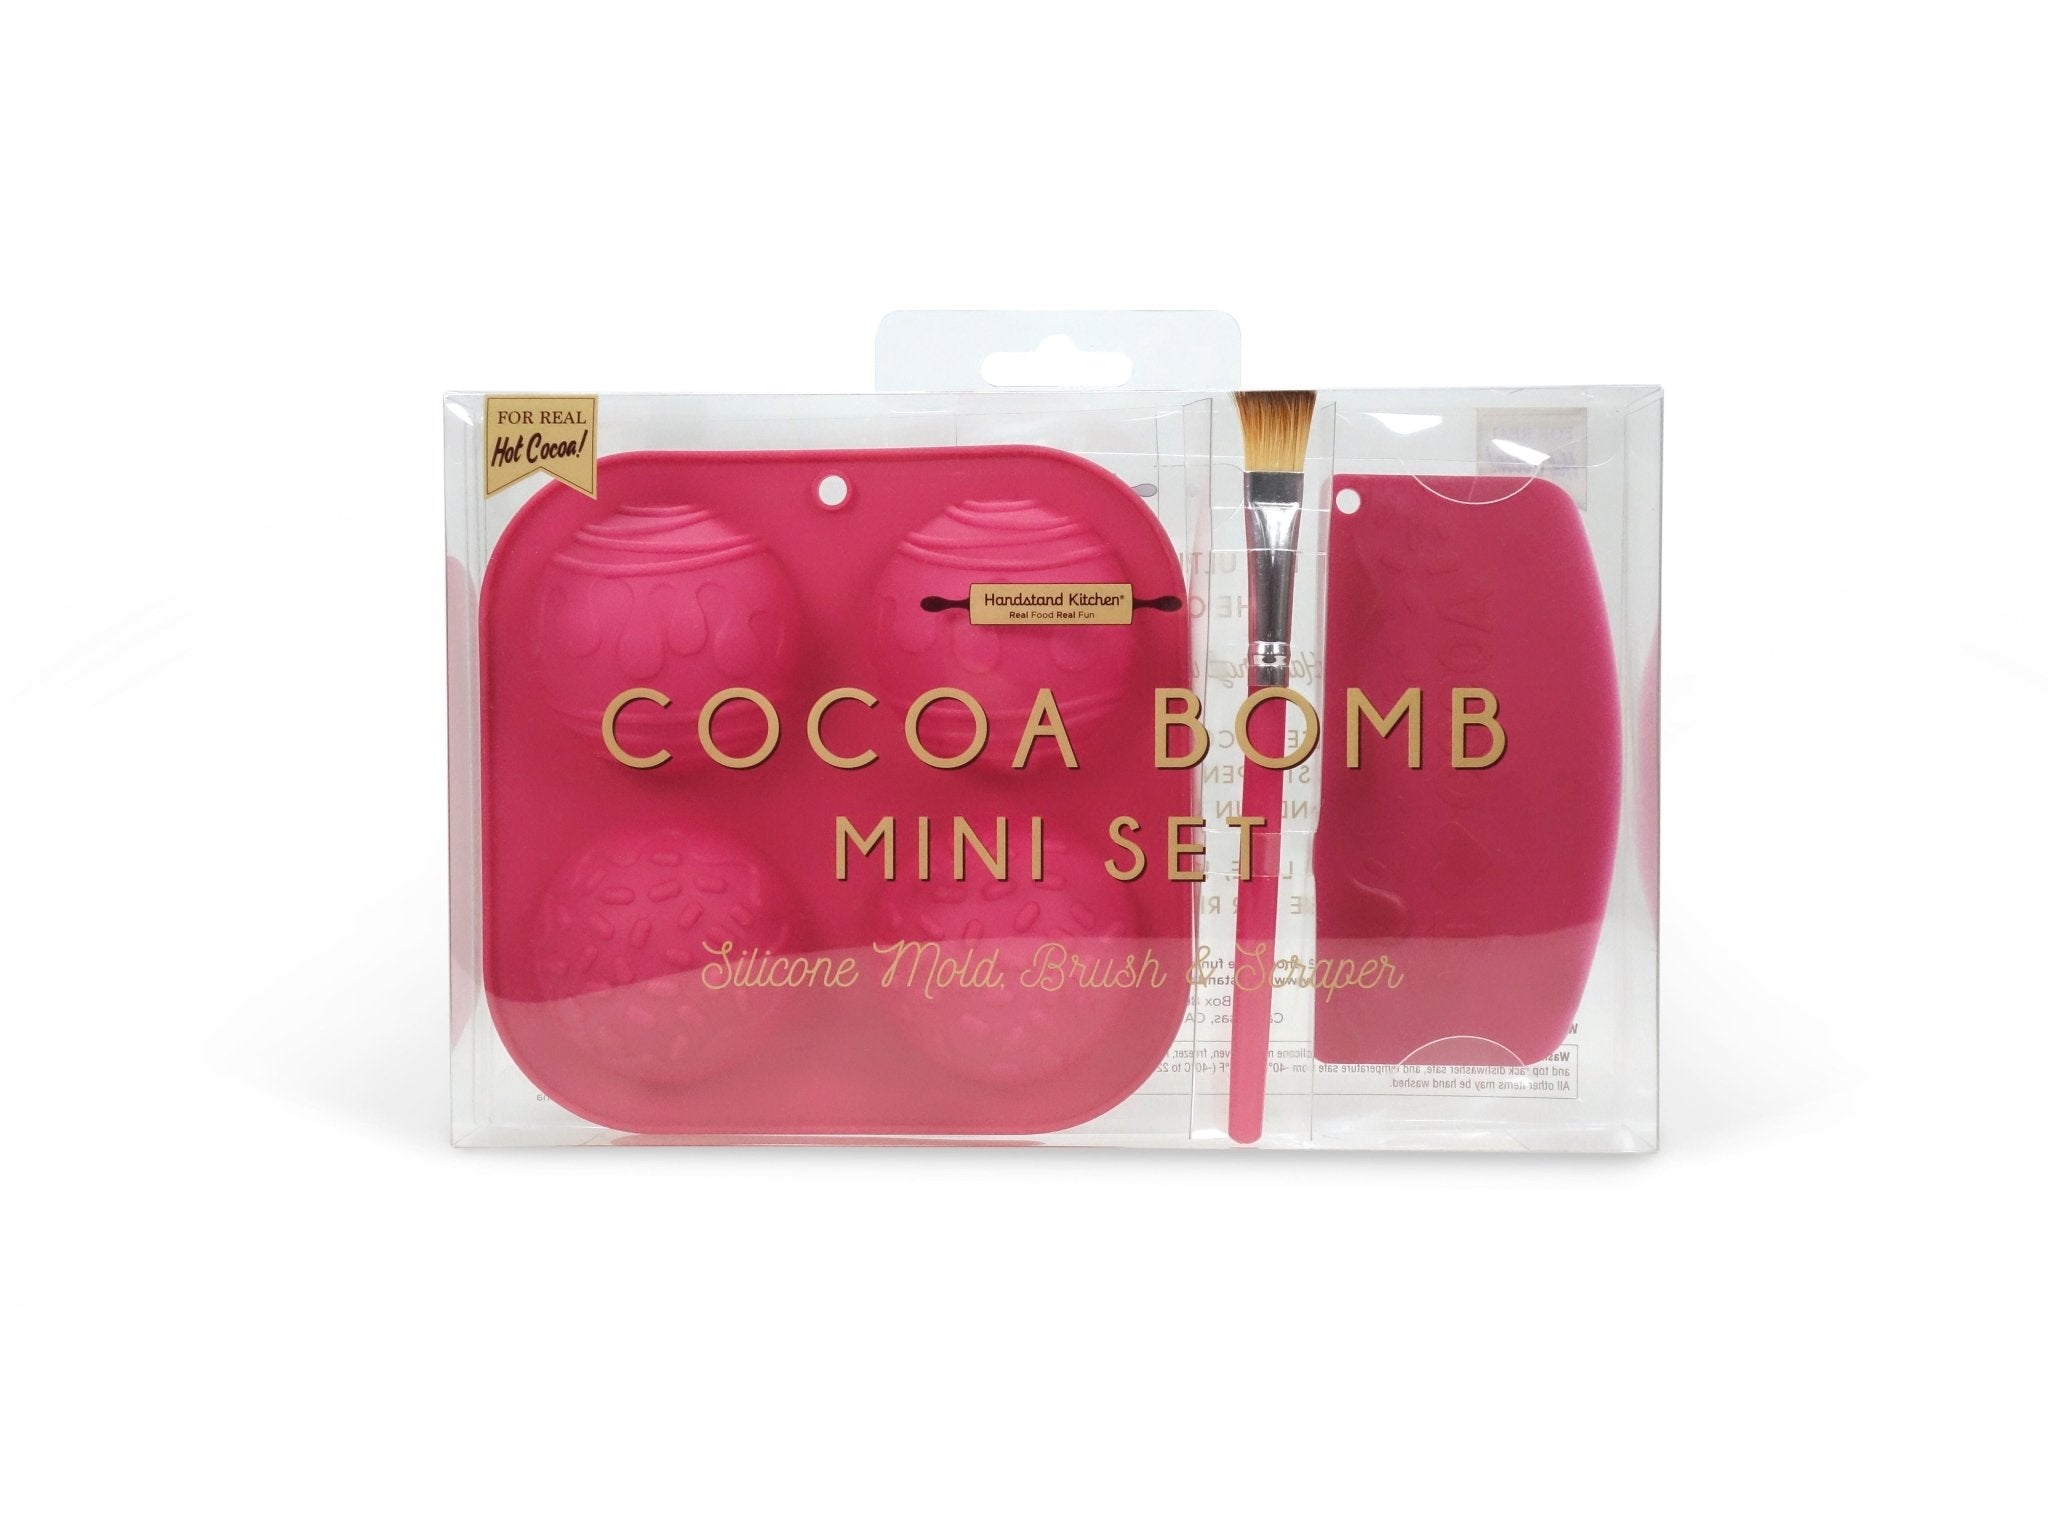 Cocoa Bomb Mini Set - Koko-Kamel.com